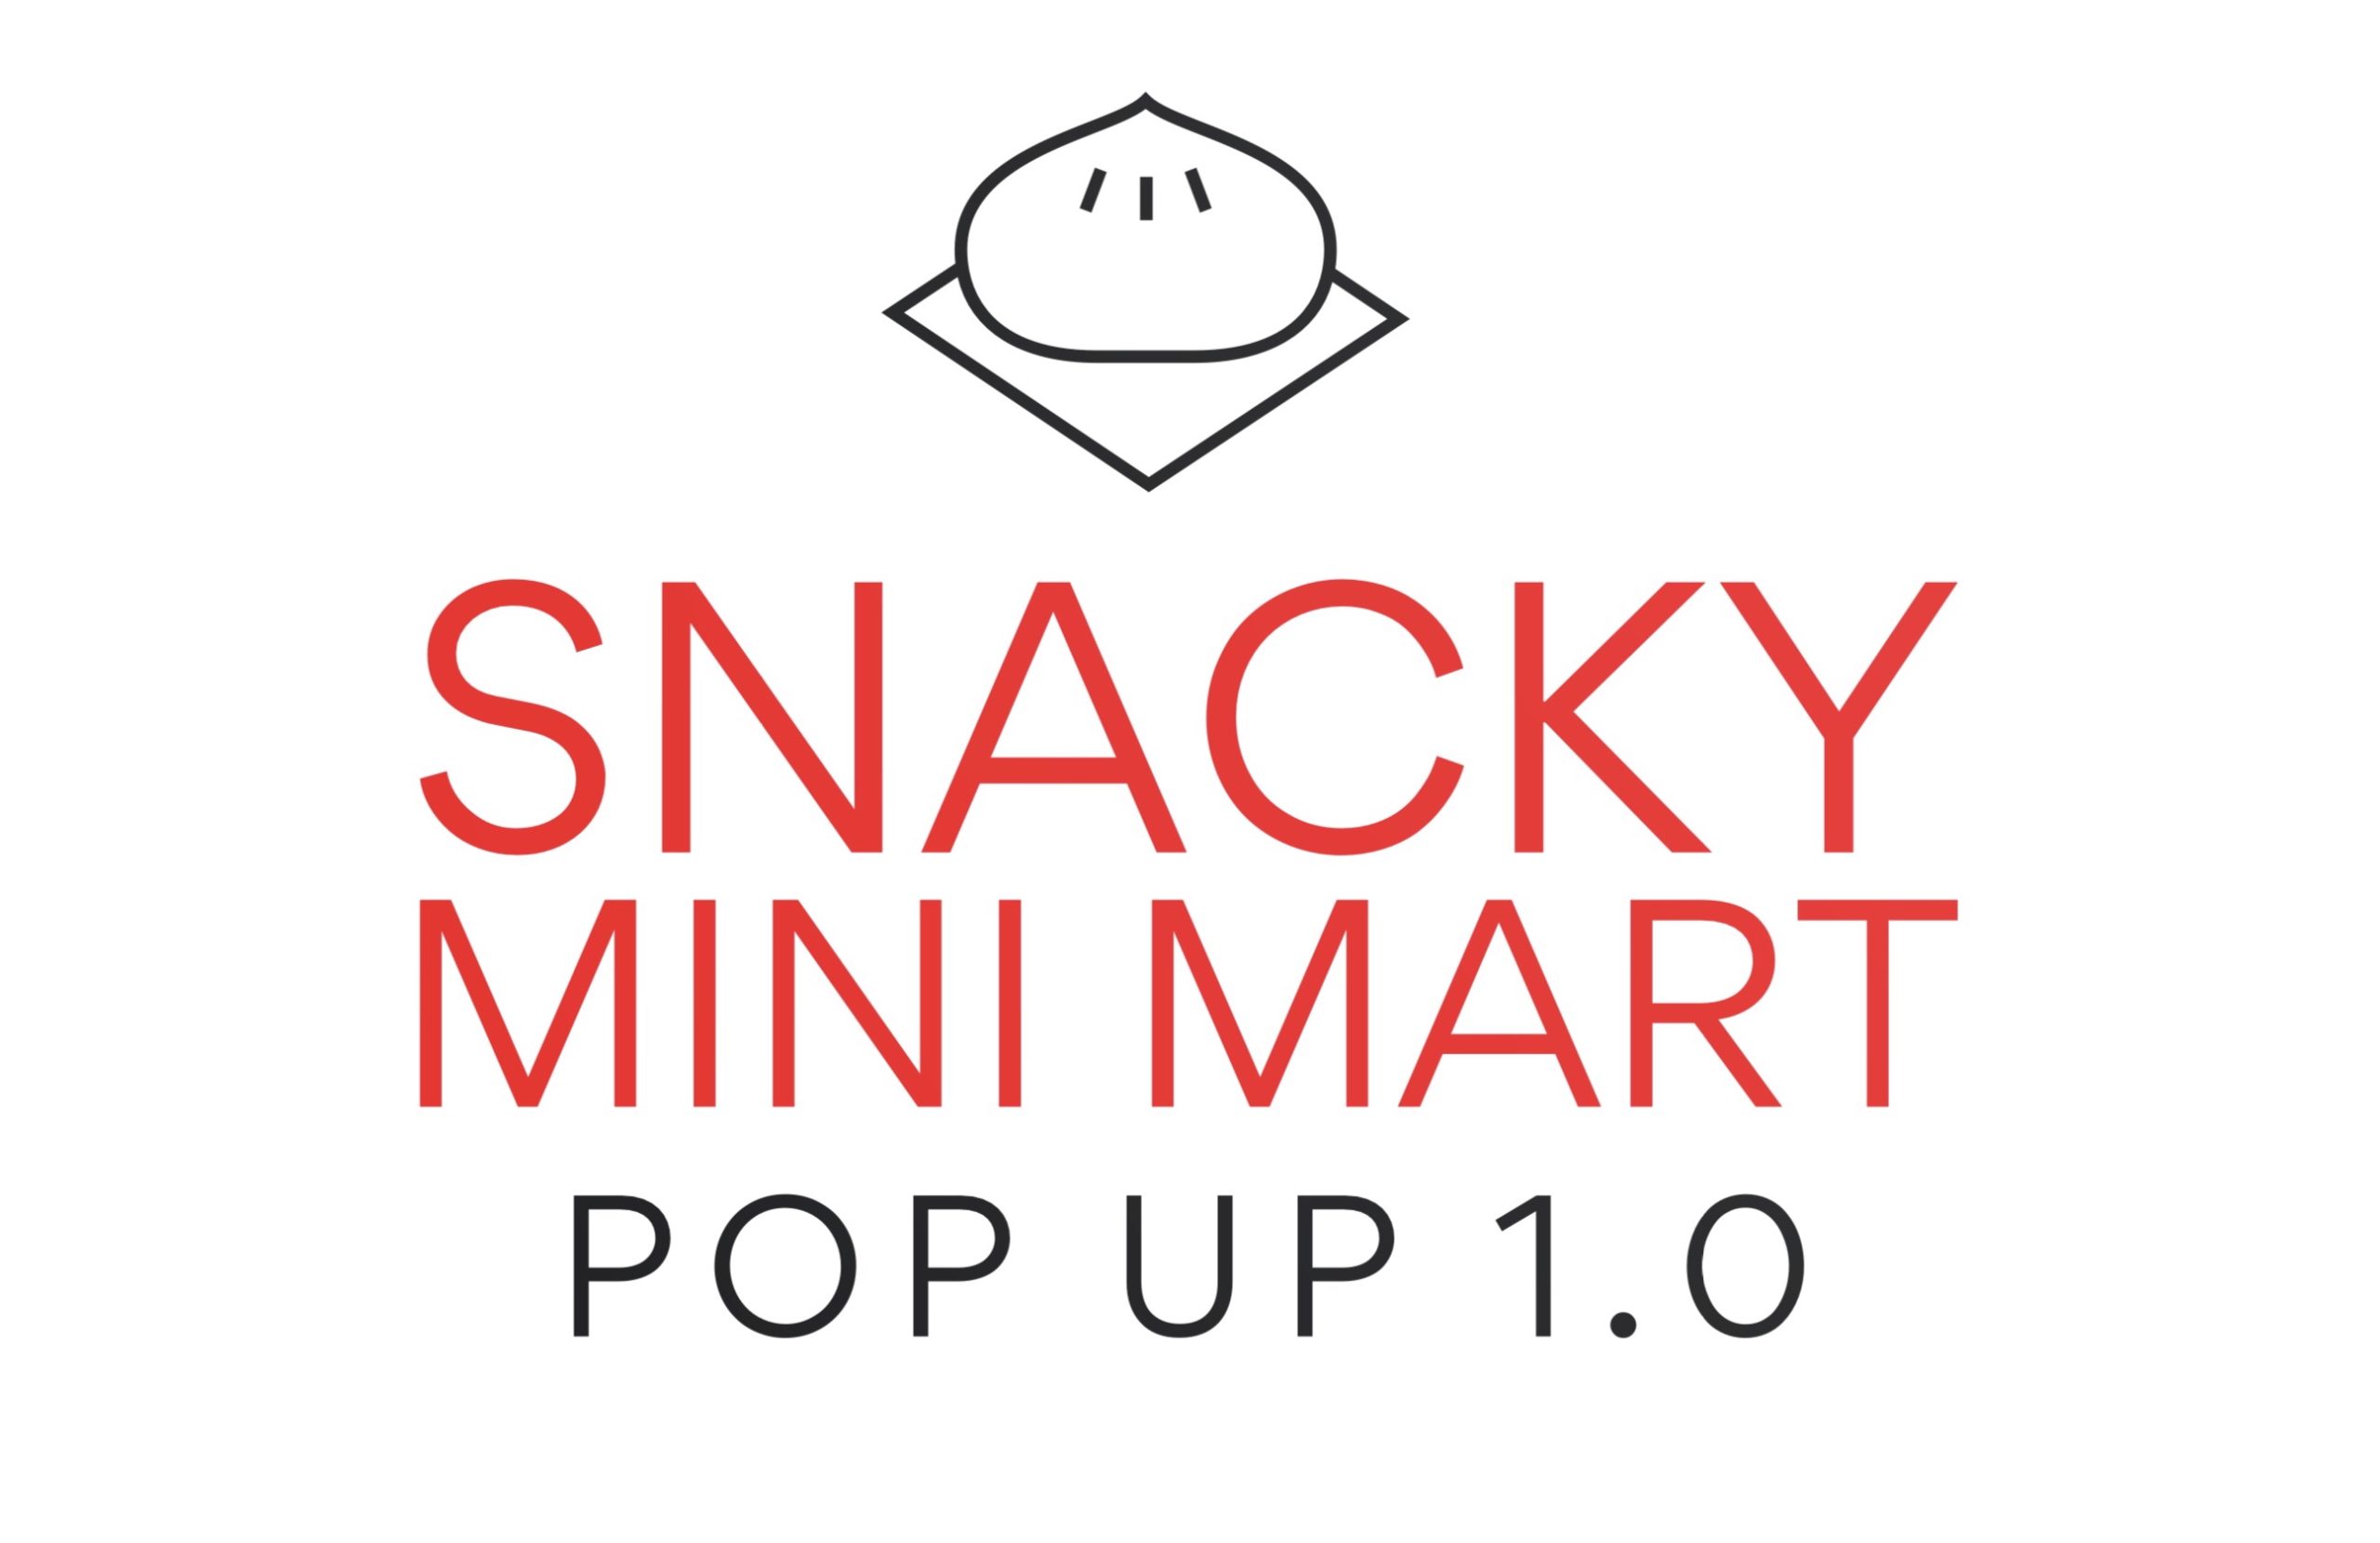 Snacky Mini Mart Pop Up 1.0 @ Marco’s Island